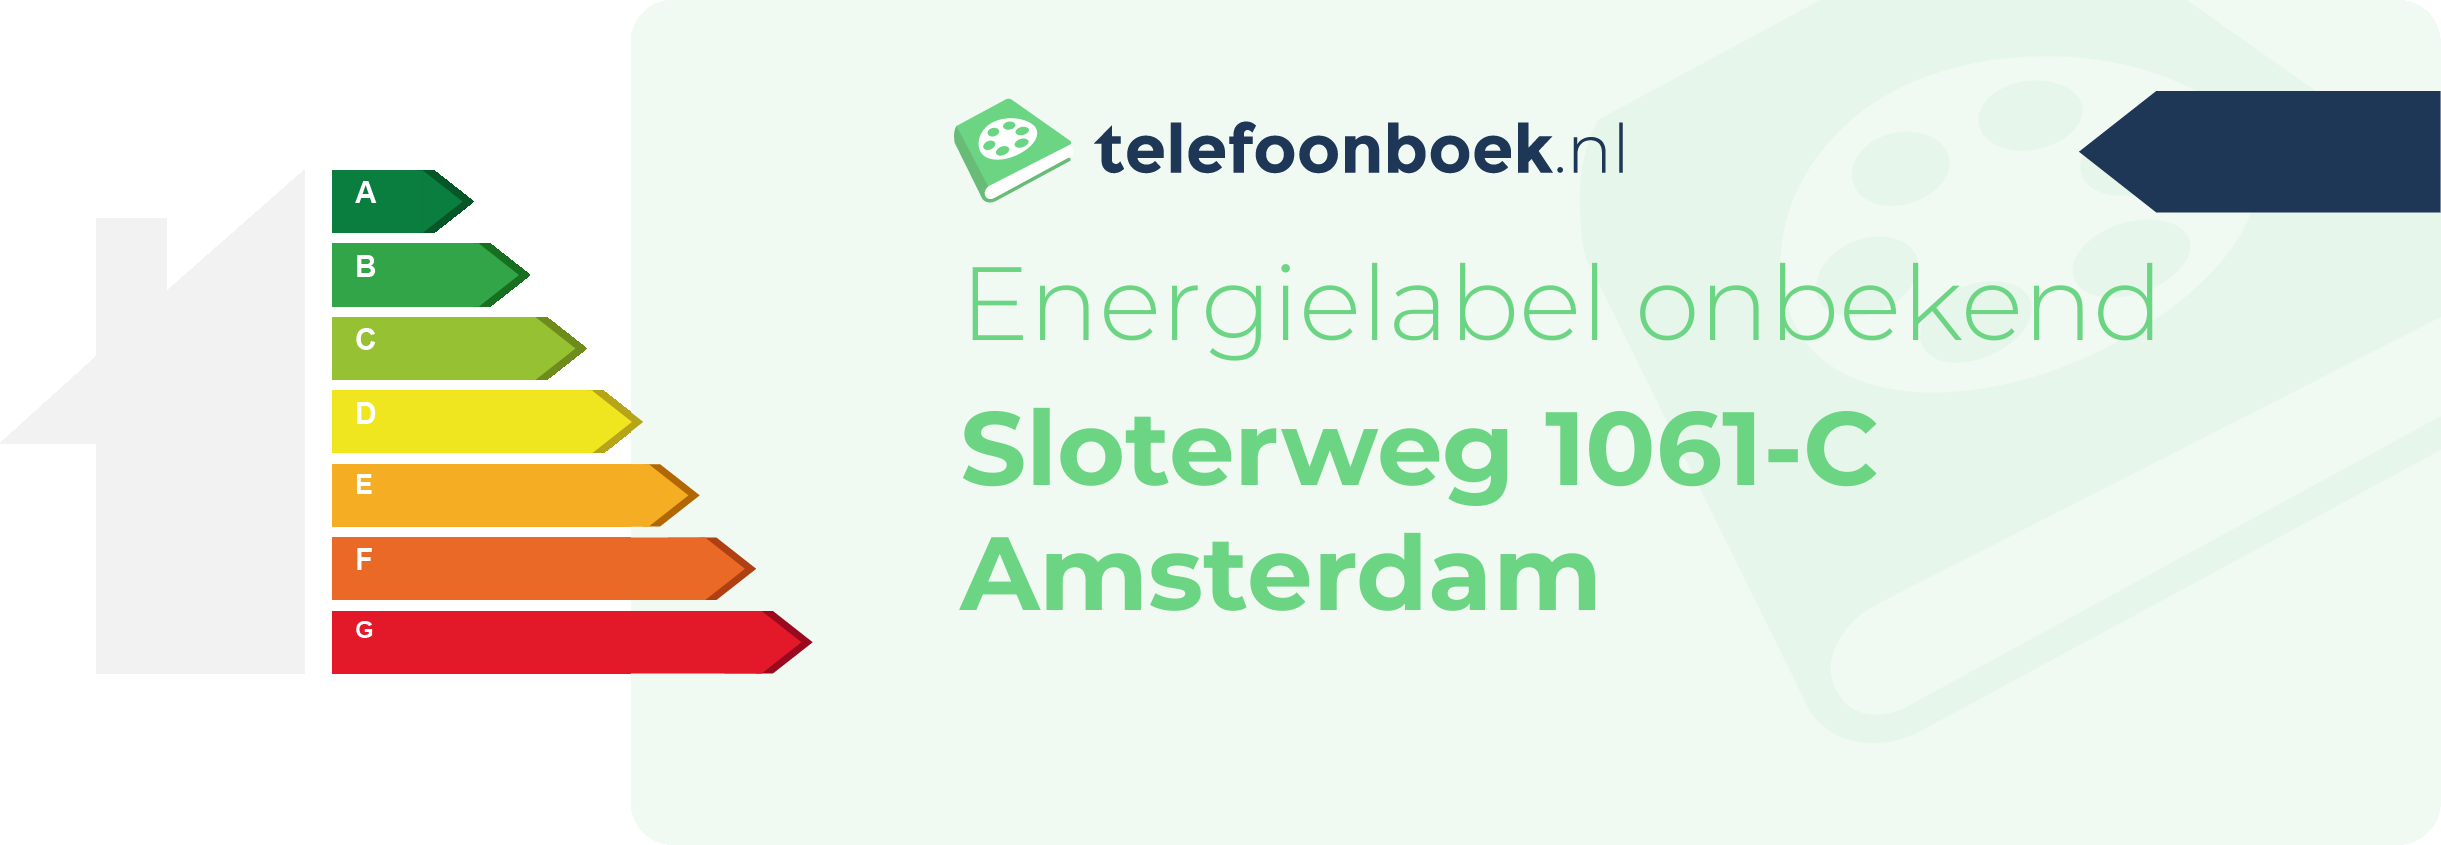 Energielabel Sloterweg 1061-C Amsterdam